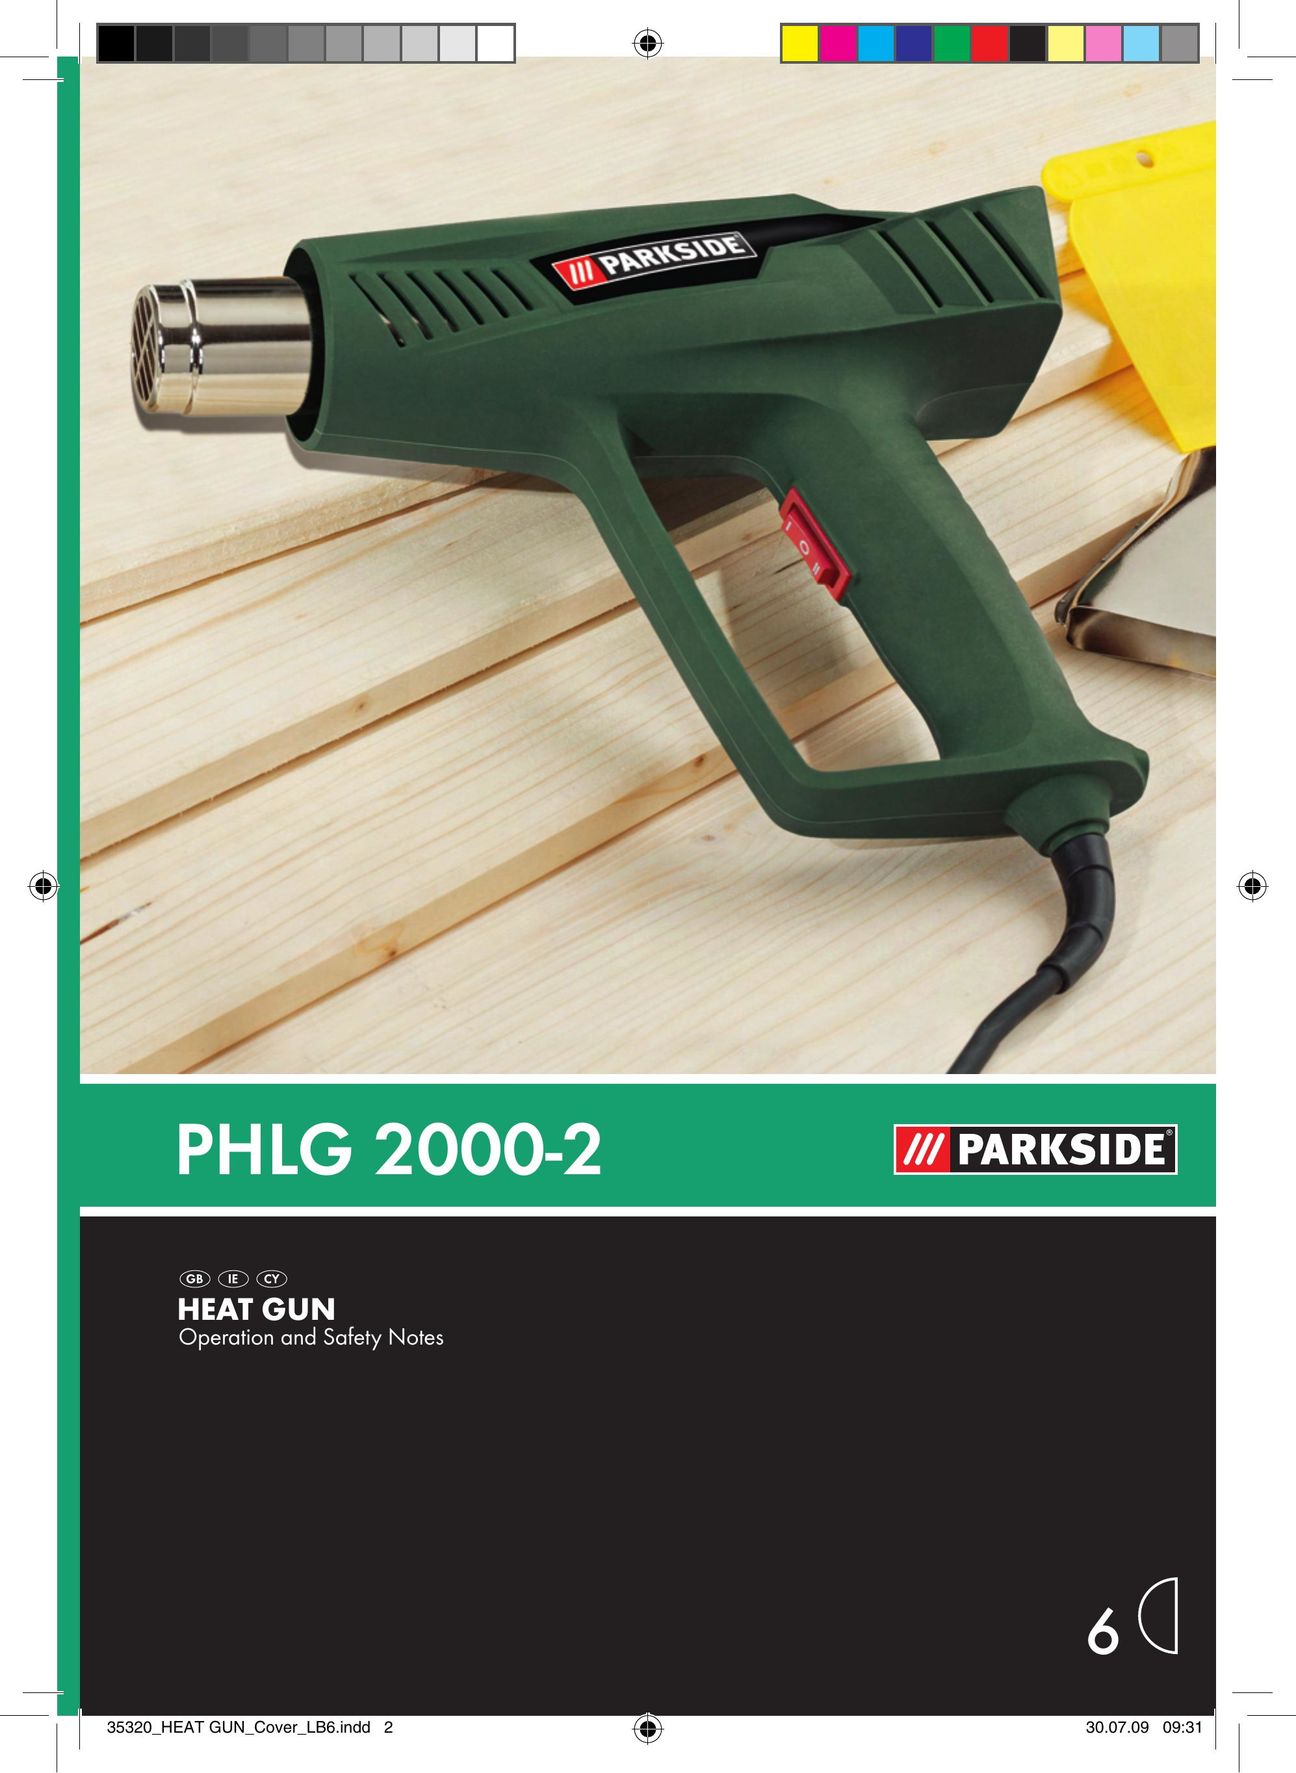 Parkside PHLG 2000-2 Heat Gun User Manual